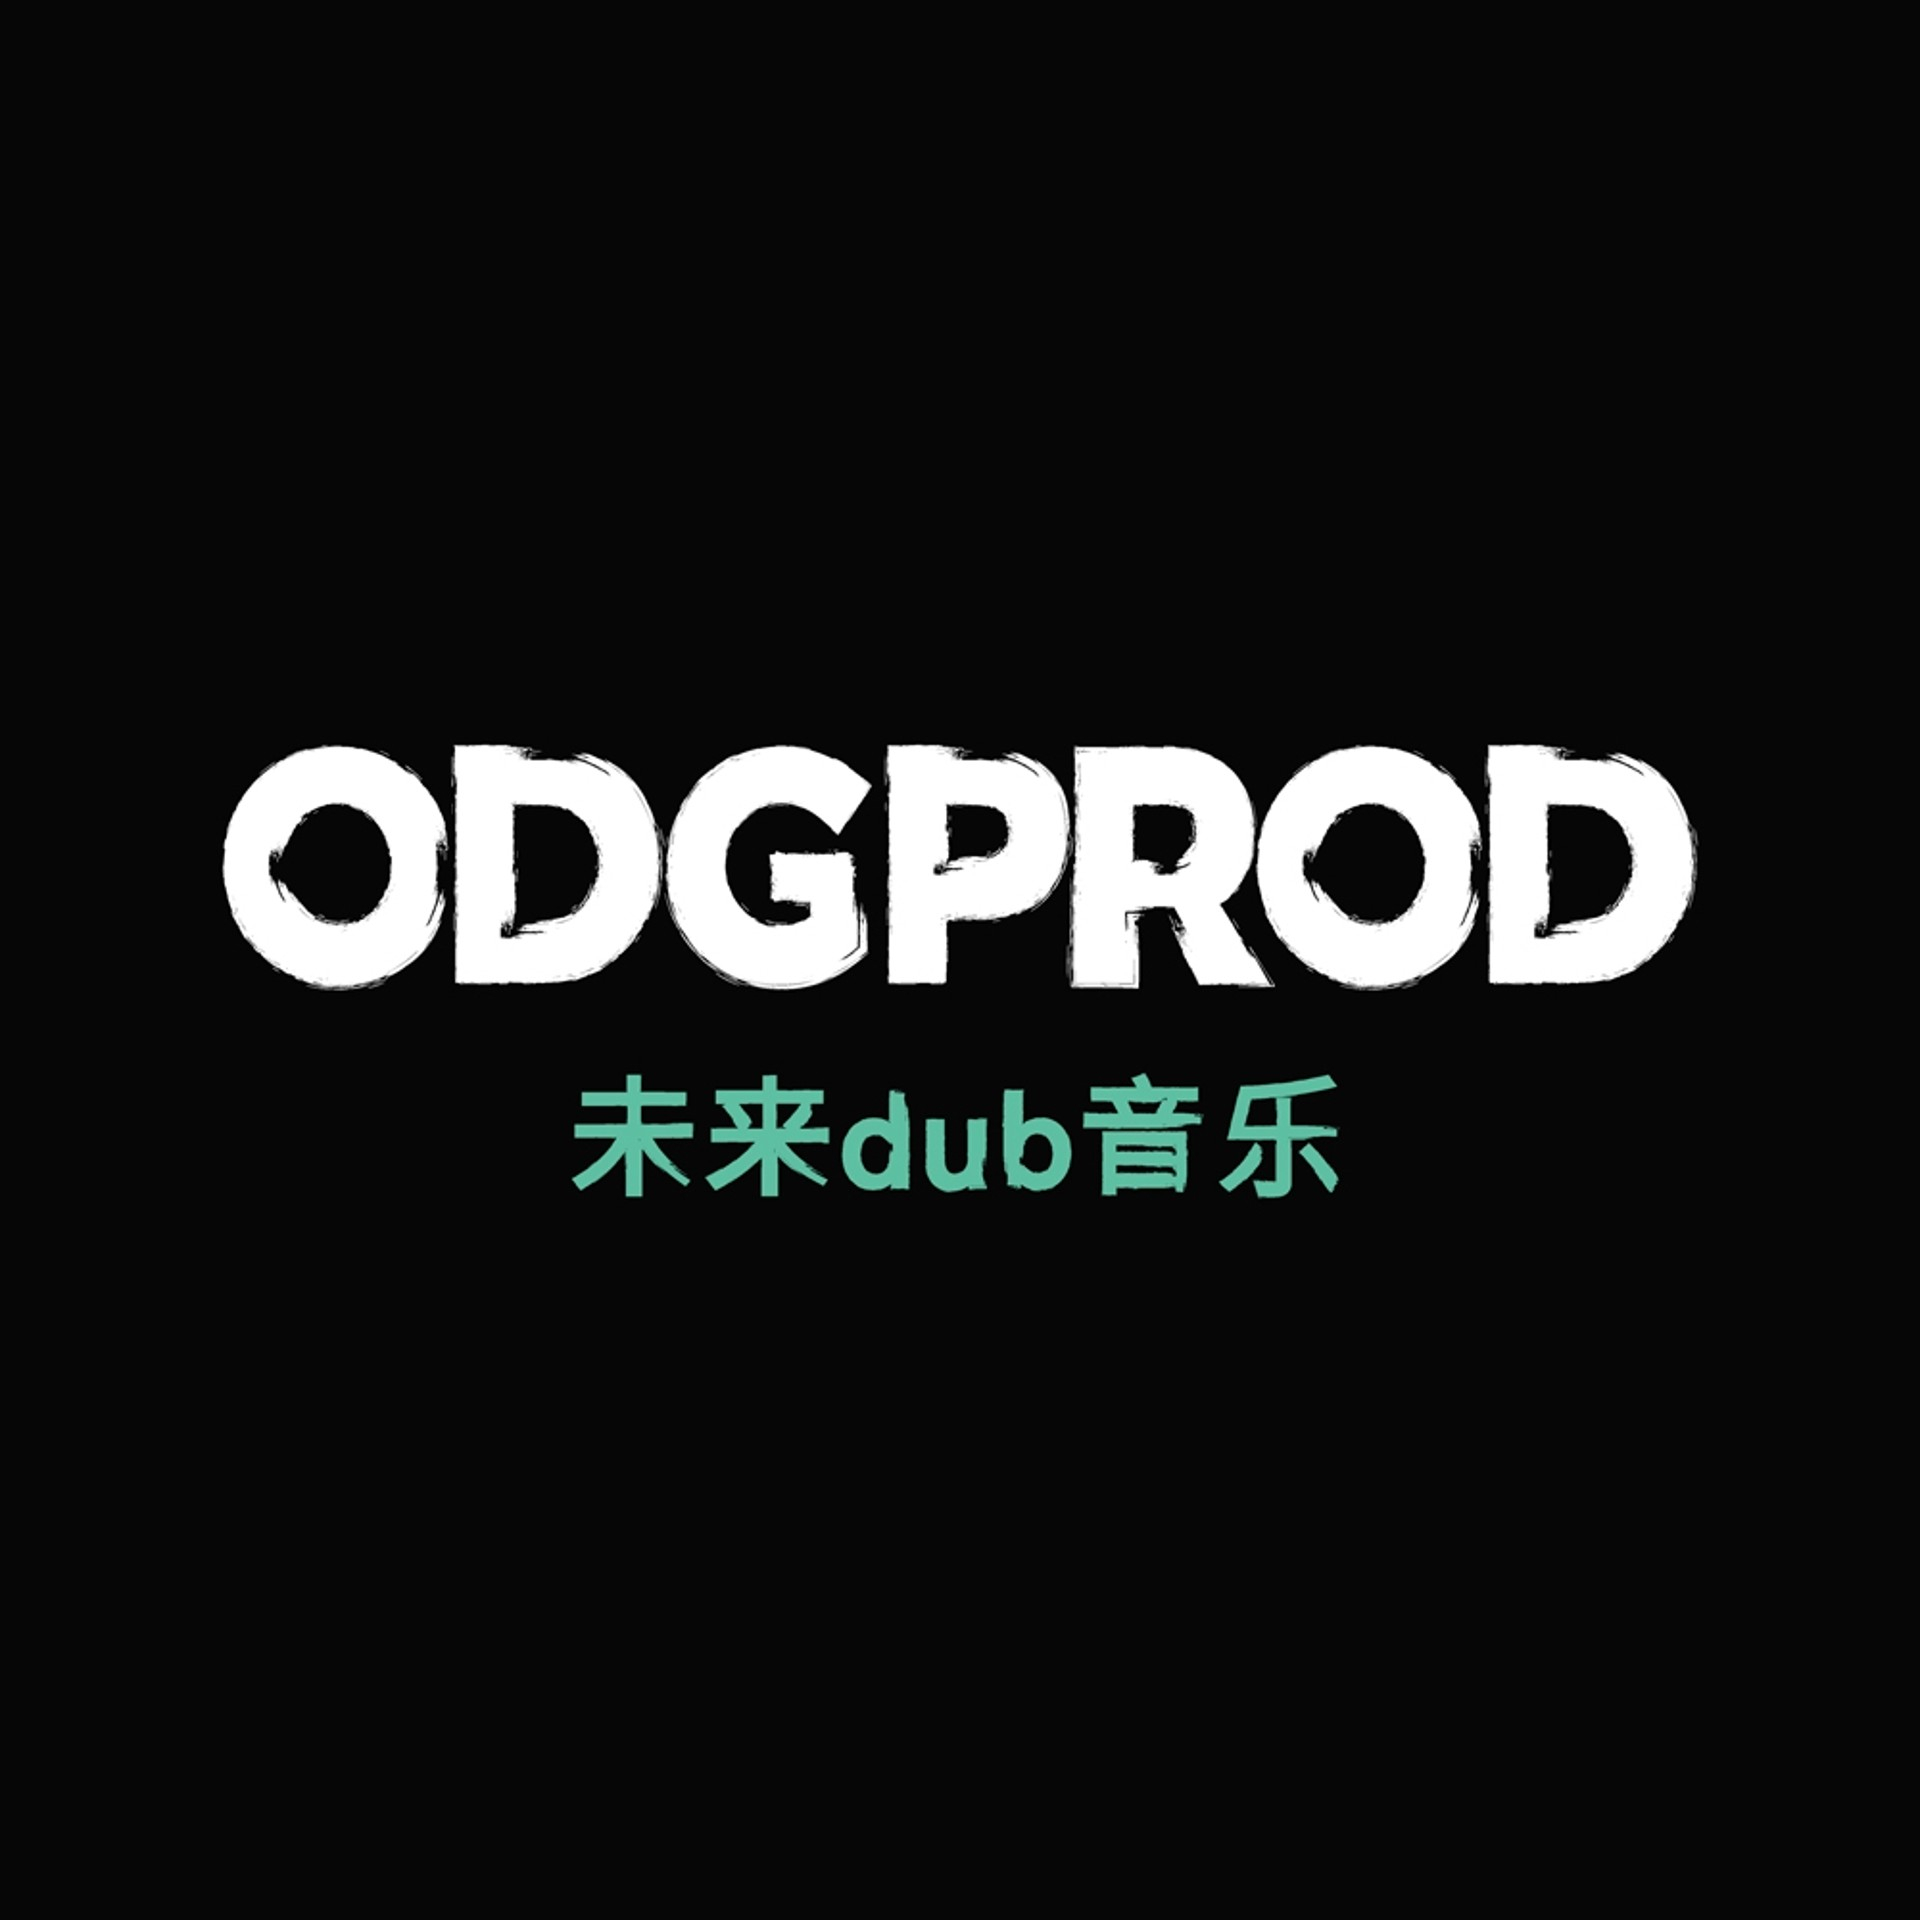 ODGProd | Future Dub Music